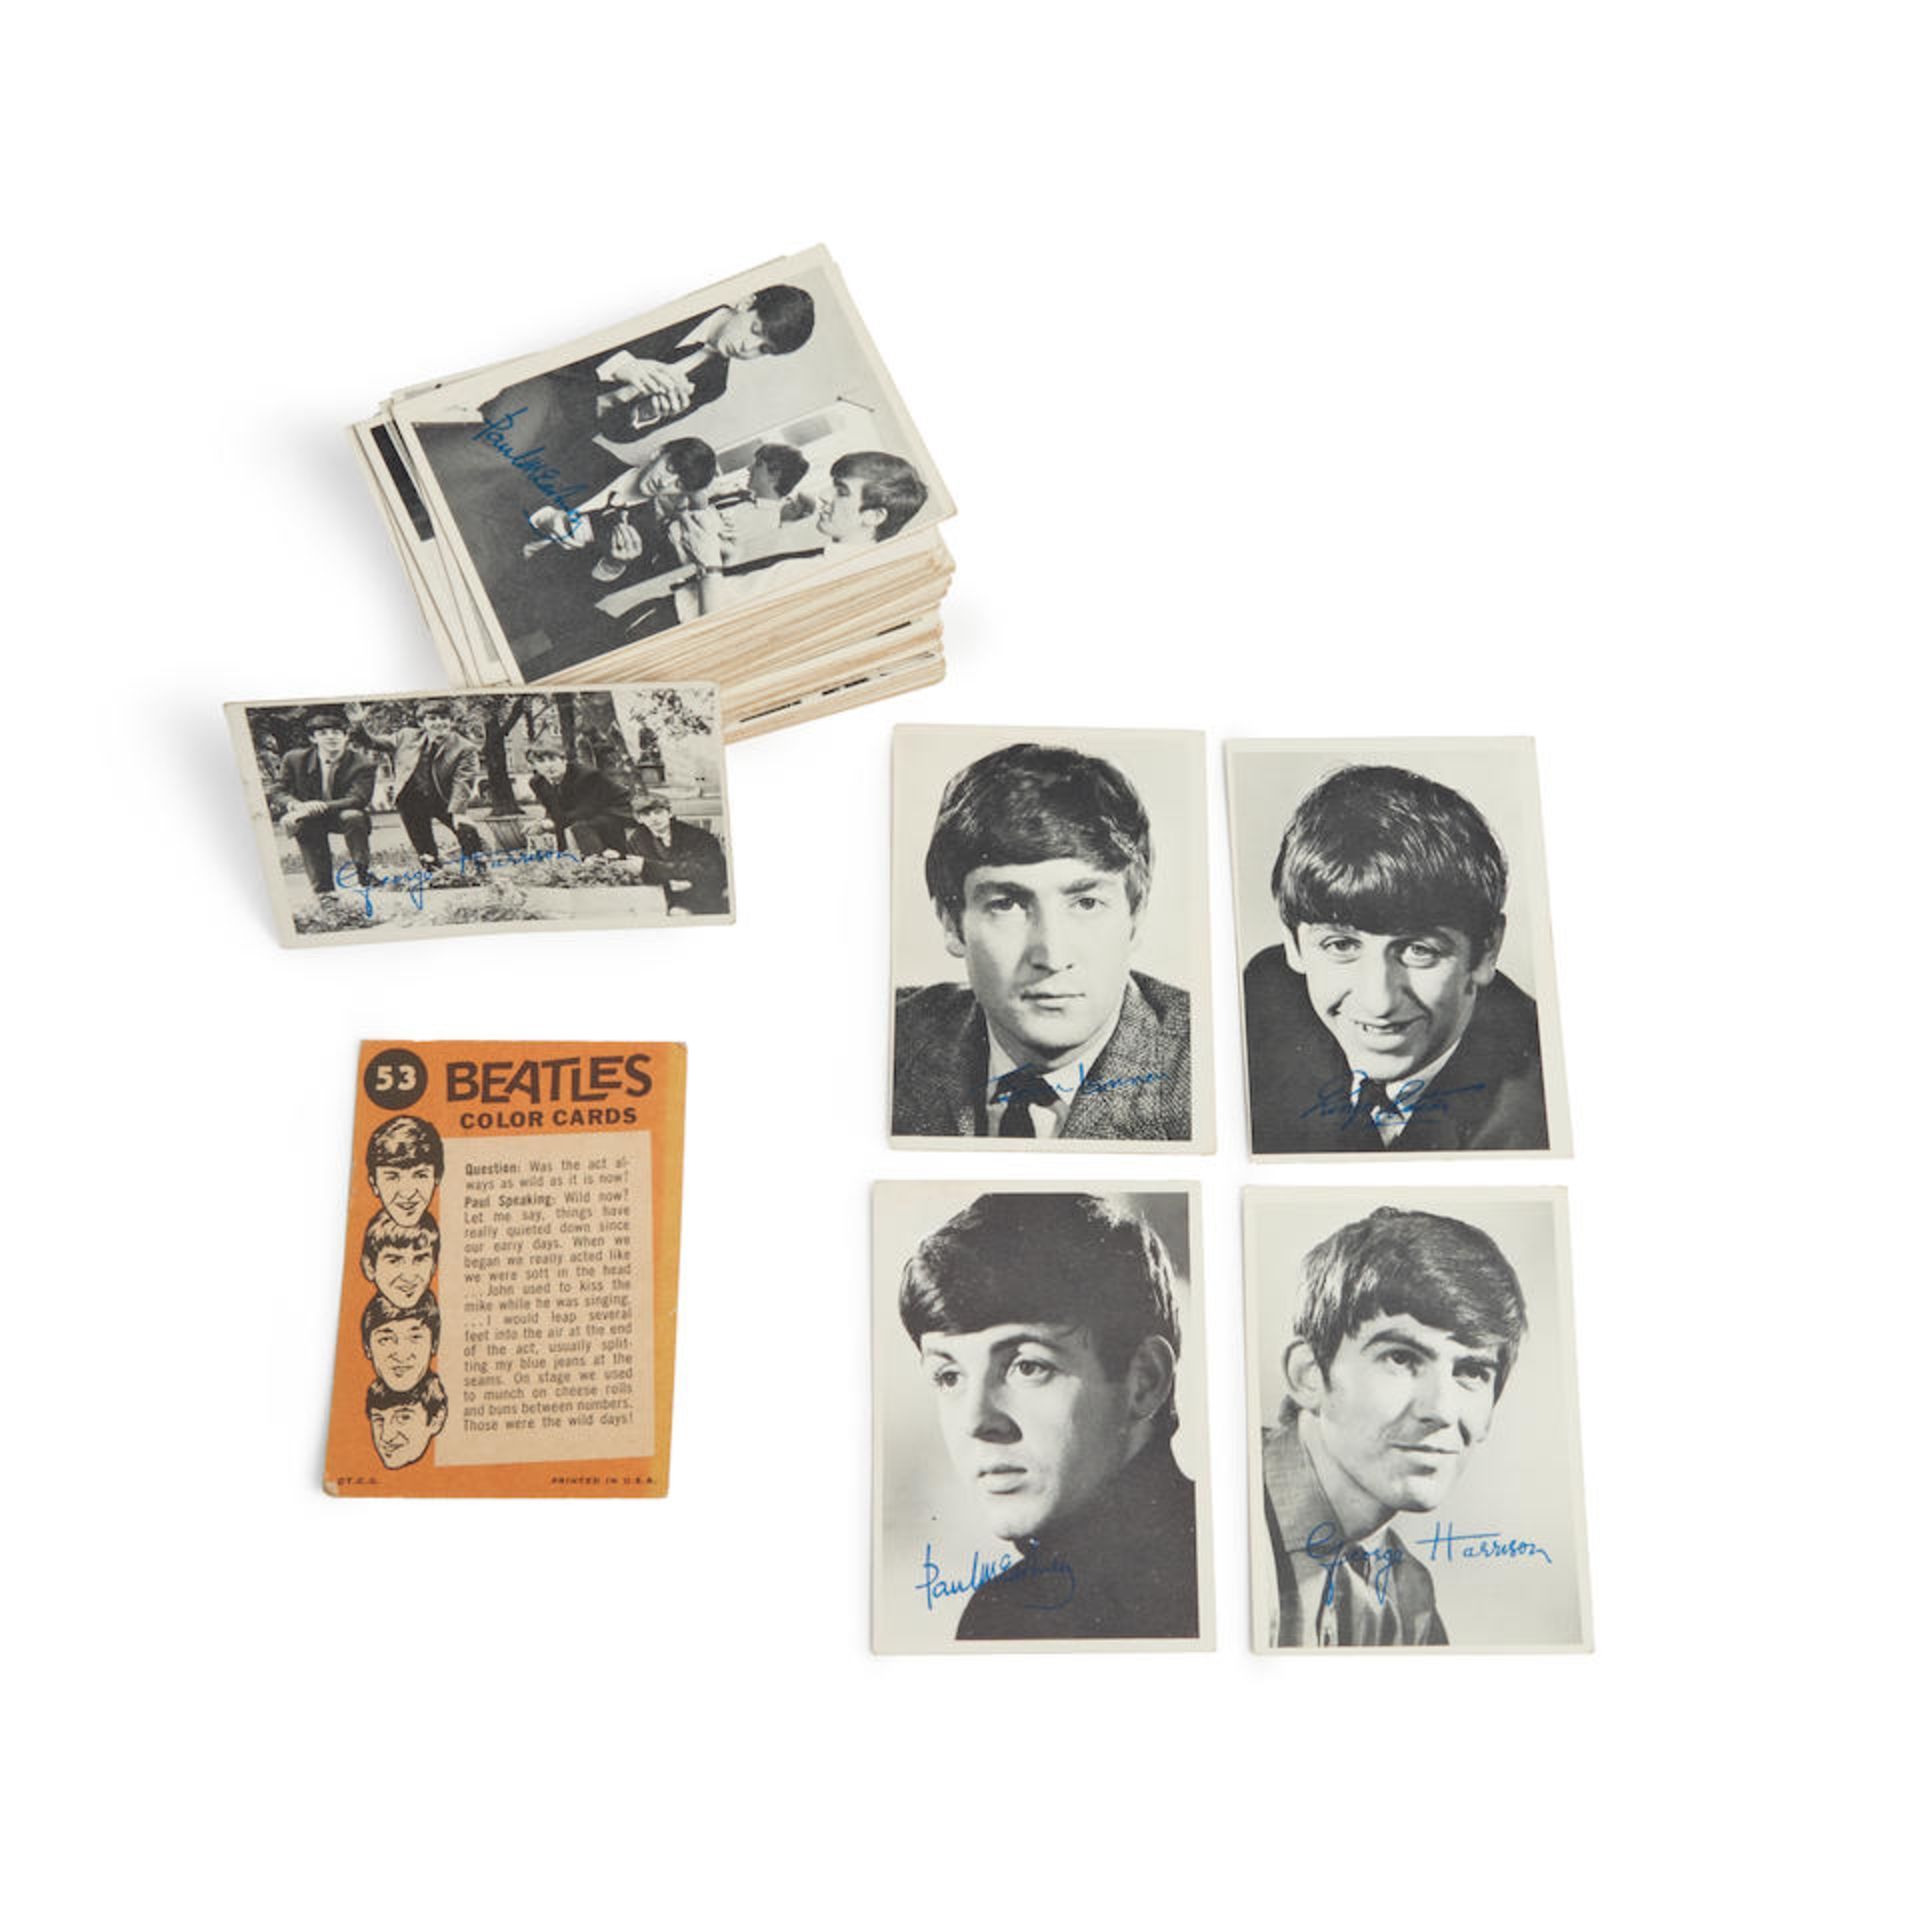 BEATLEMANIA. A group of Beatles photo cards.